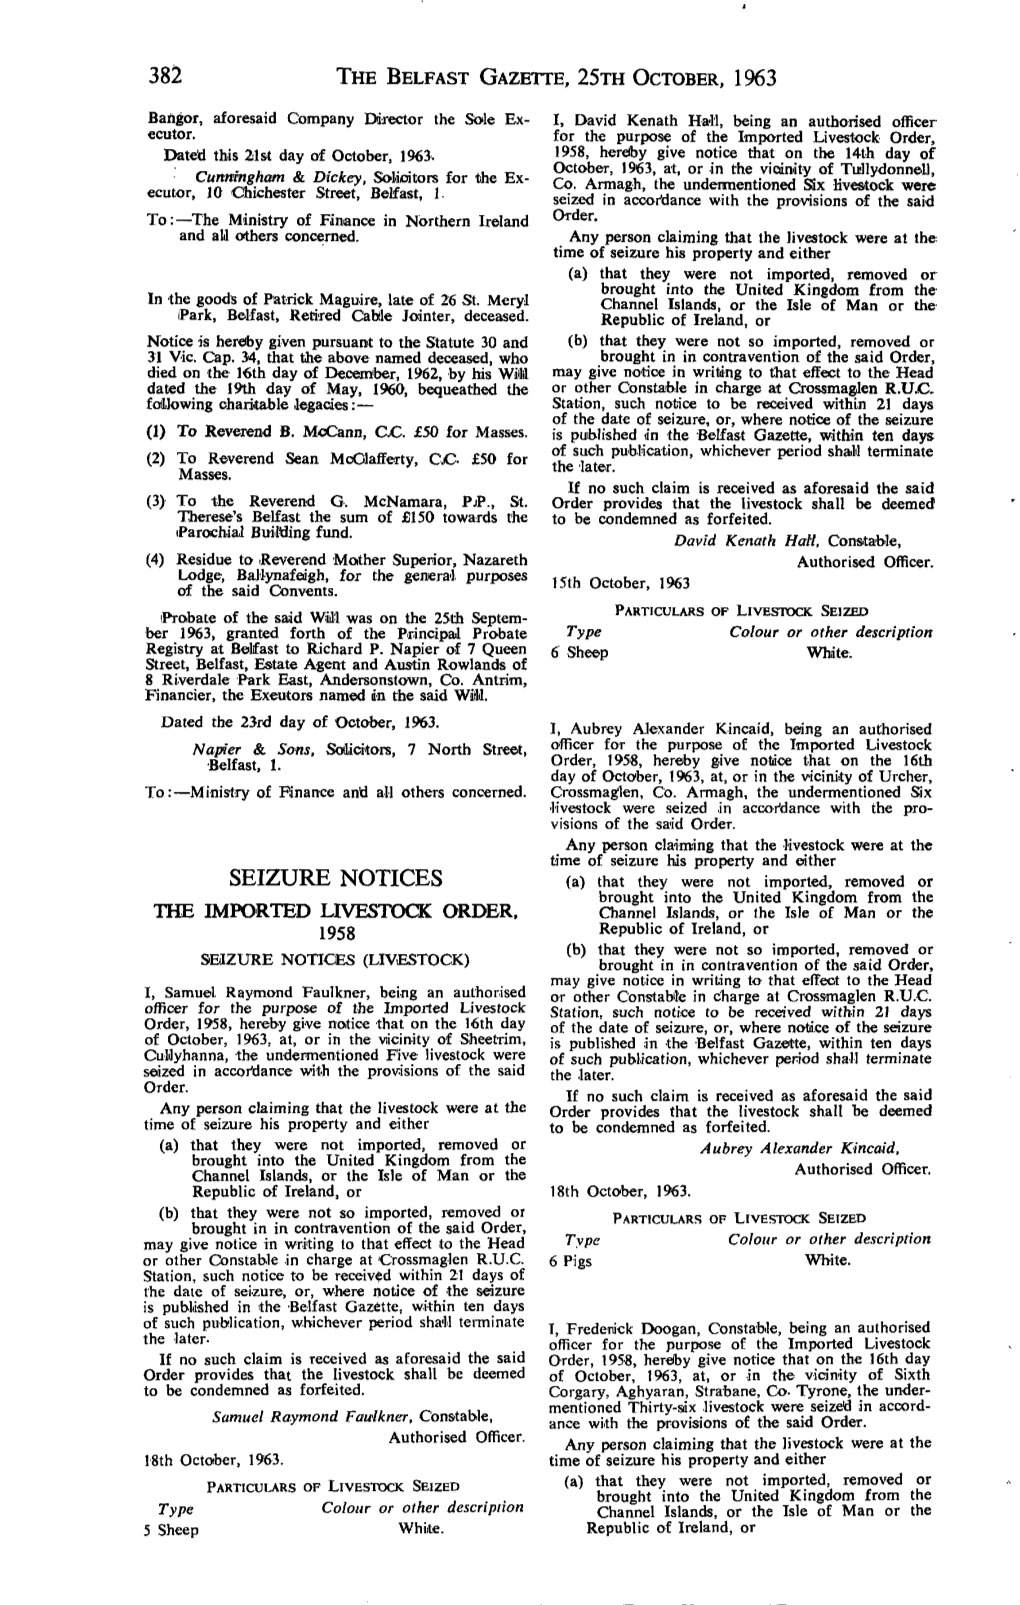 THE BELFAST GAZETTE, 25Ra OCTOBER, 1963 SEIZURE NOTICES